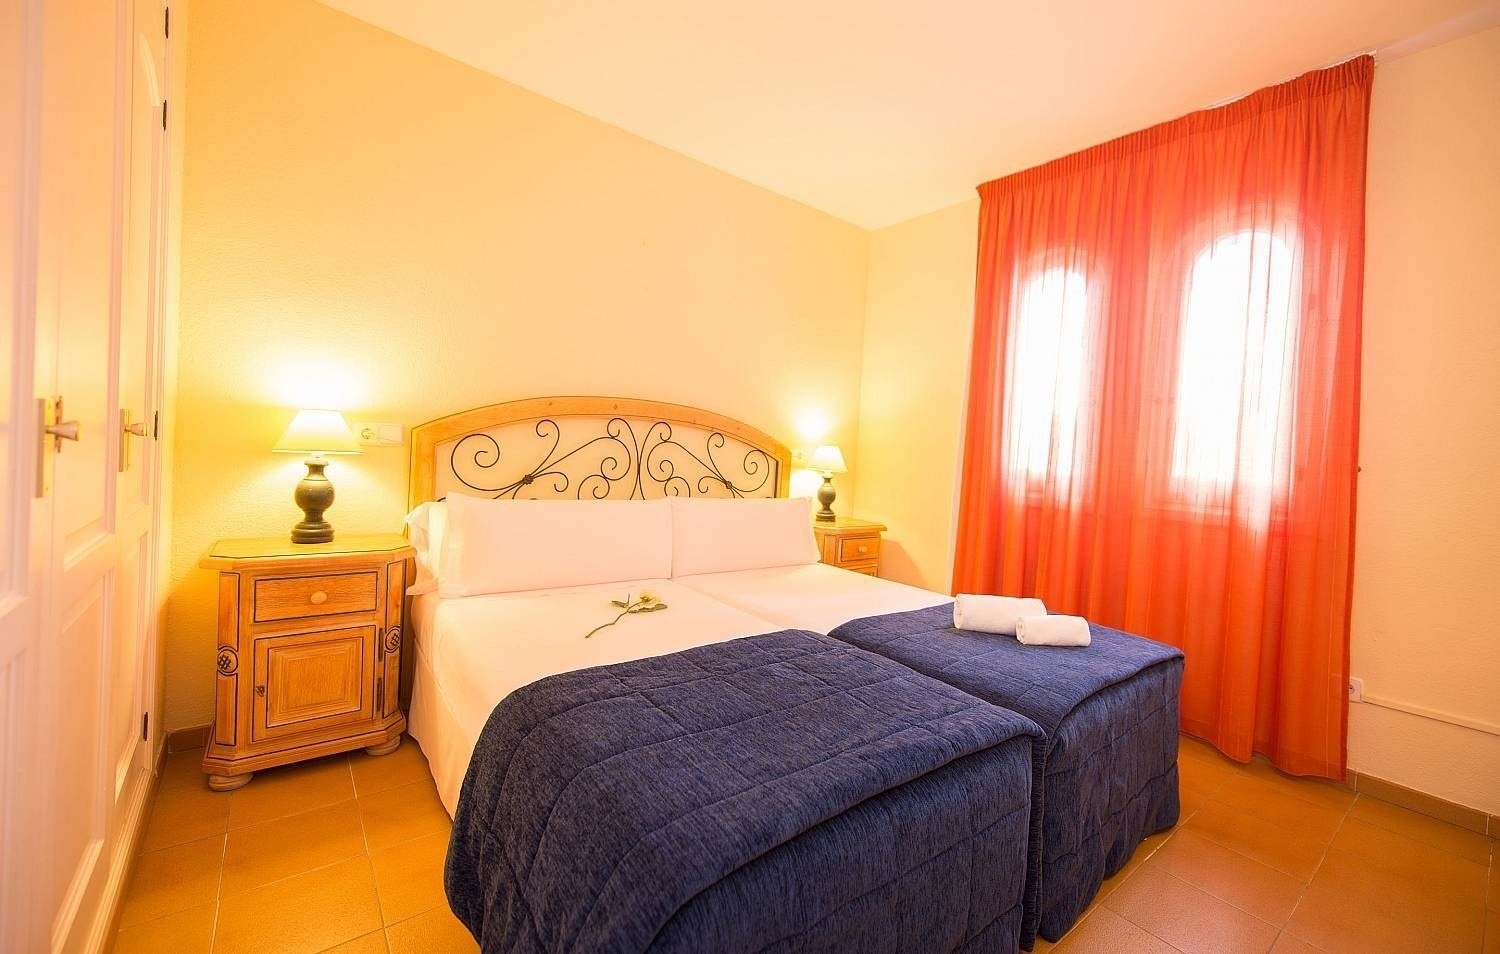 Dormitorio doble del hotel Ona Cala Pi, en Mallorca